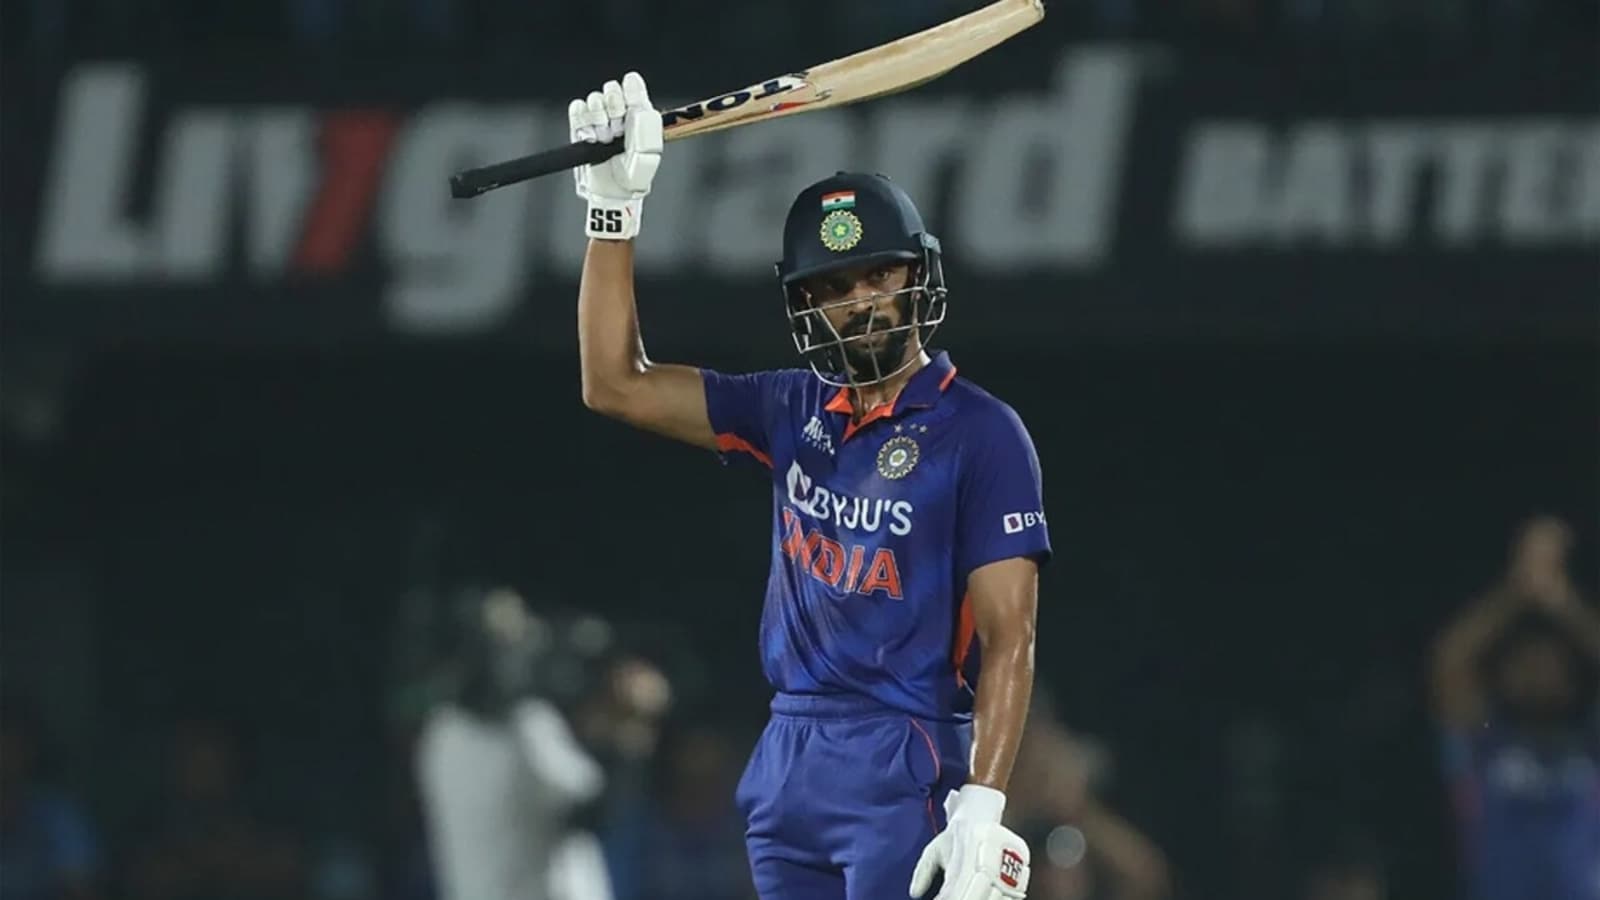 Ruturaj Gaikwad shows why India team management has backed him | Cricket - Hindustan Times